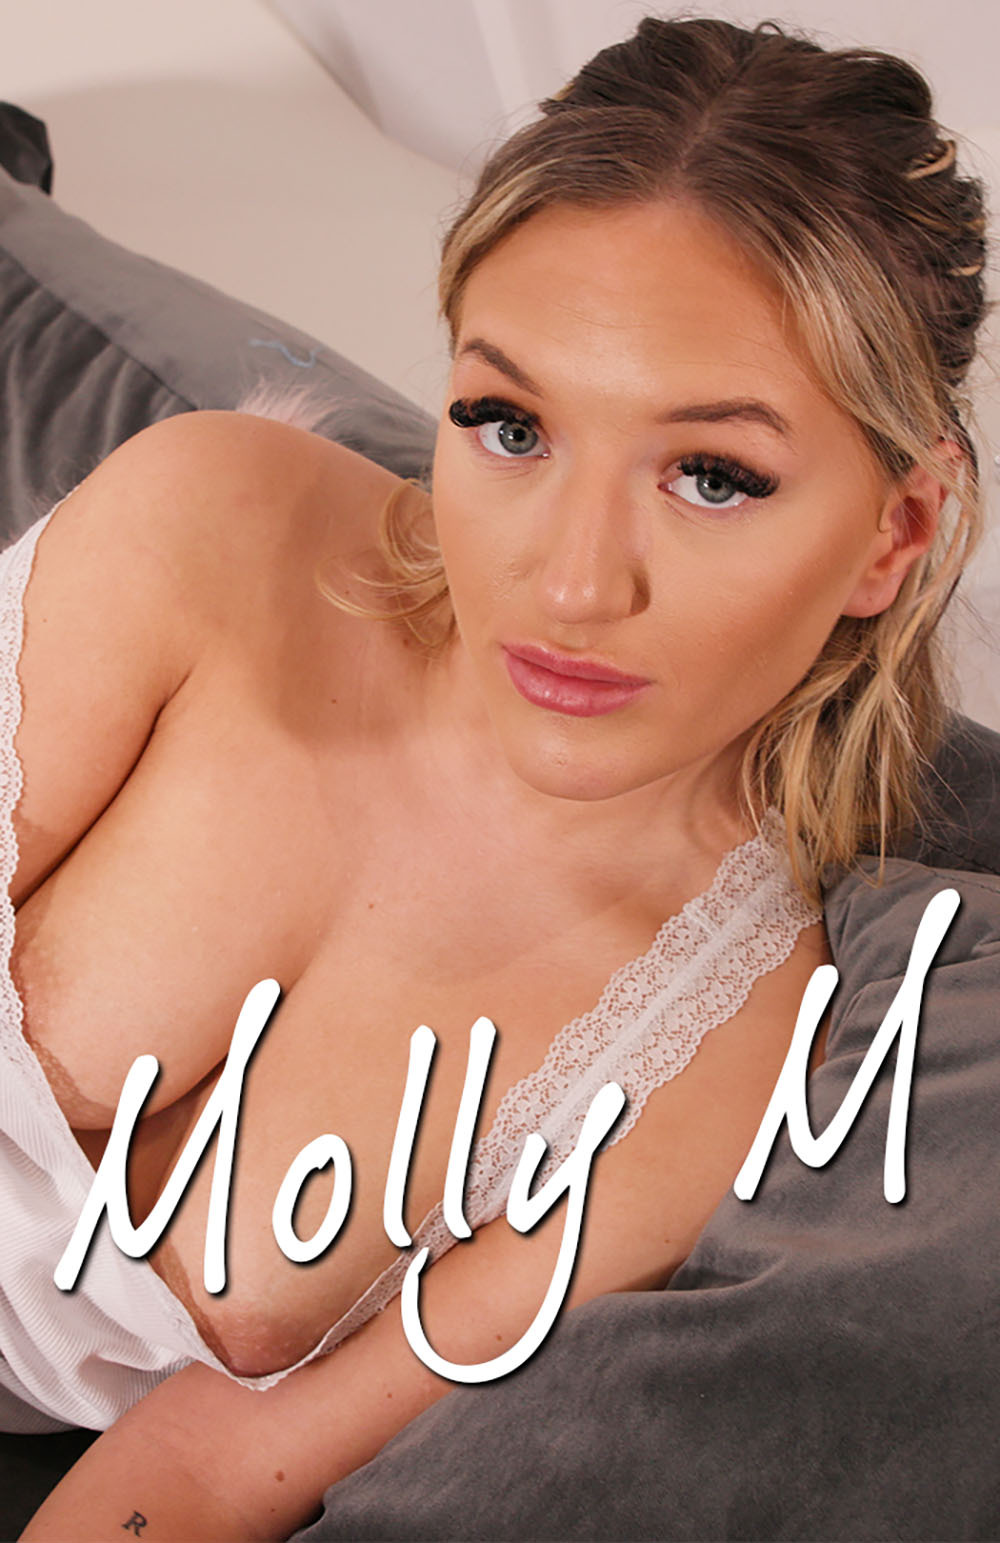 Molly M